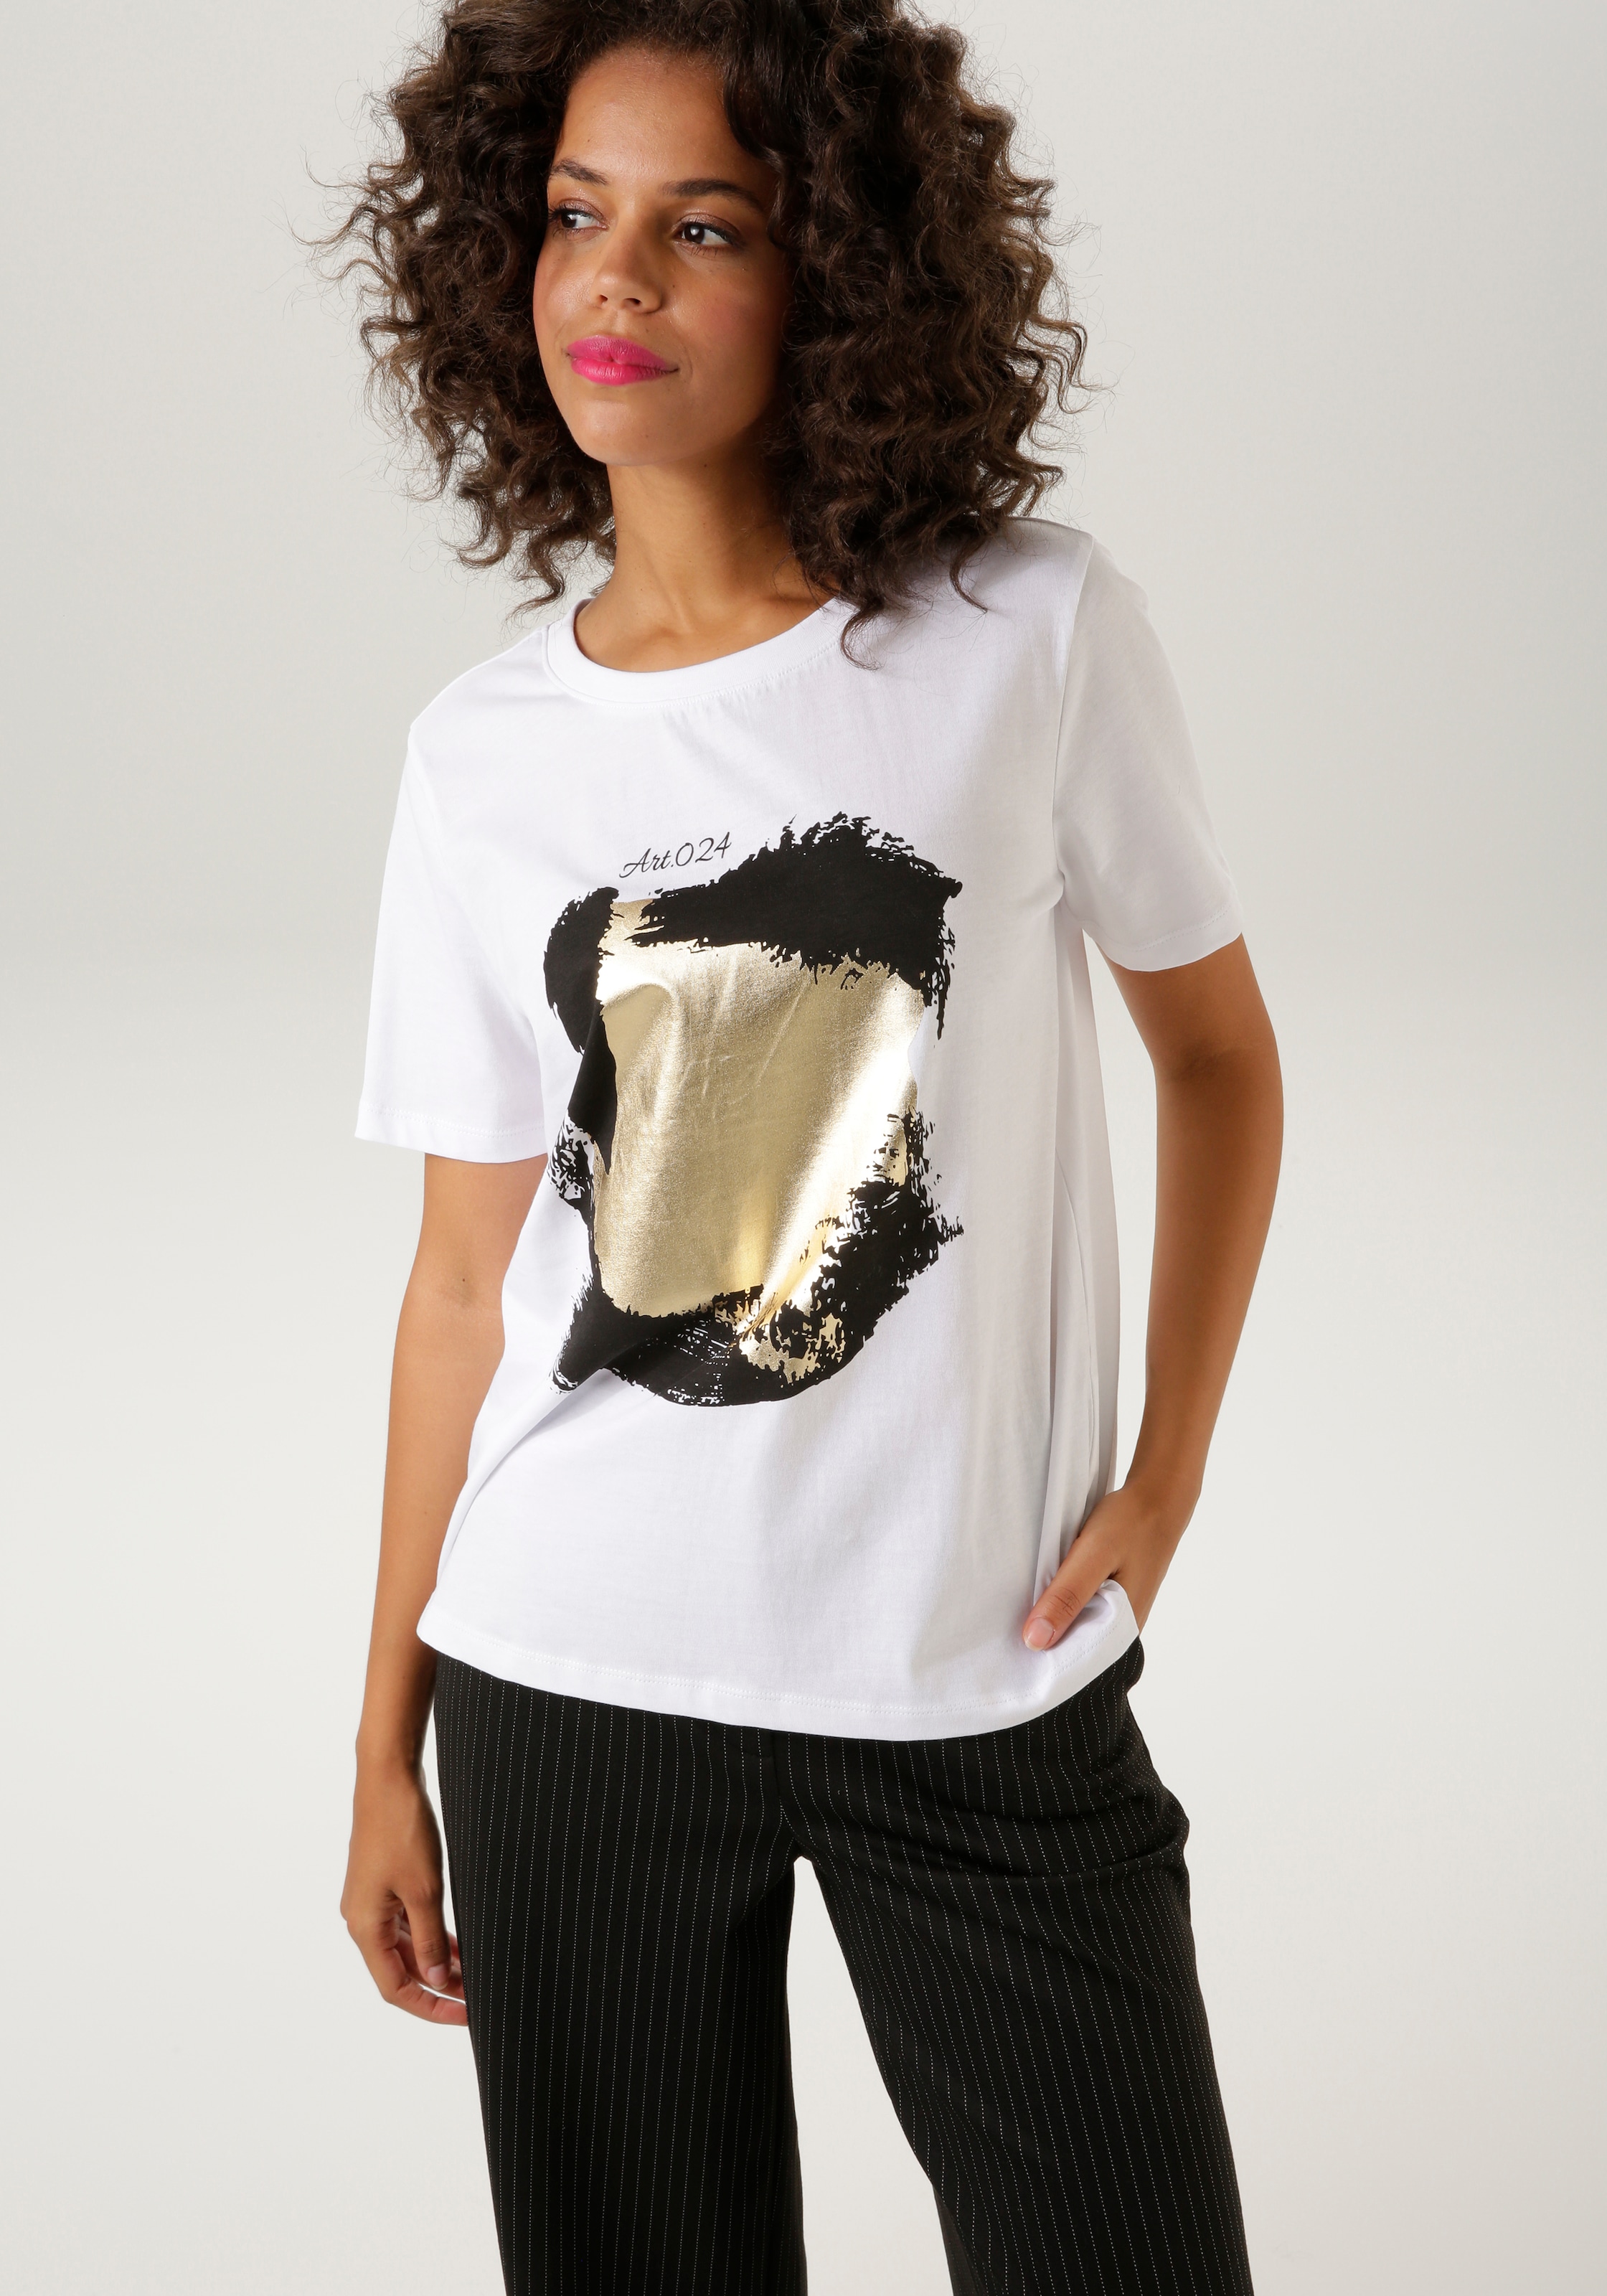 - BAUR | T-Shirt, CASUAL Foliendruck Aniston verzierter bestellen mit goldfarbenem Frontprint NEUE KOLLEKTION